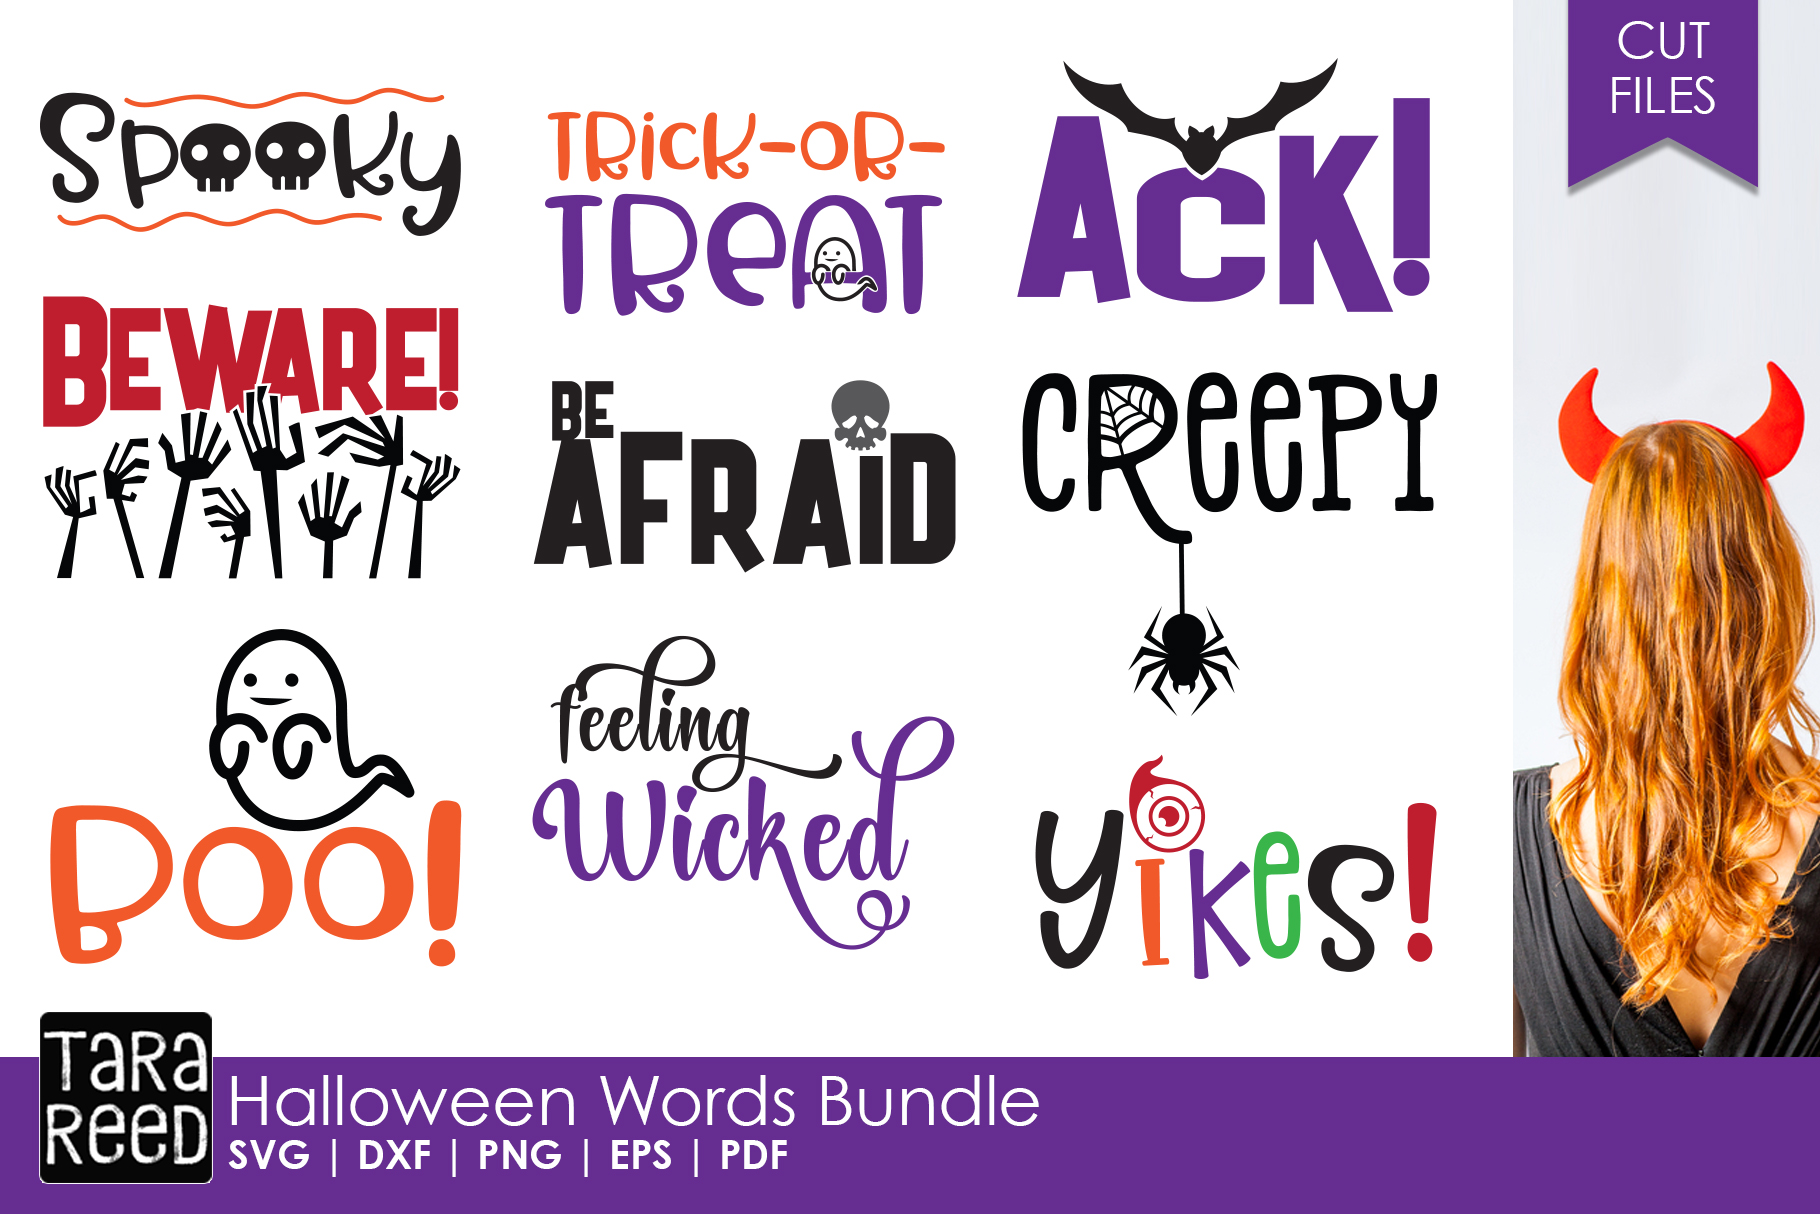 Halloween Words Bundle (112930)  Cut Files  Design Bundles